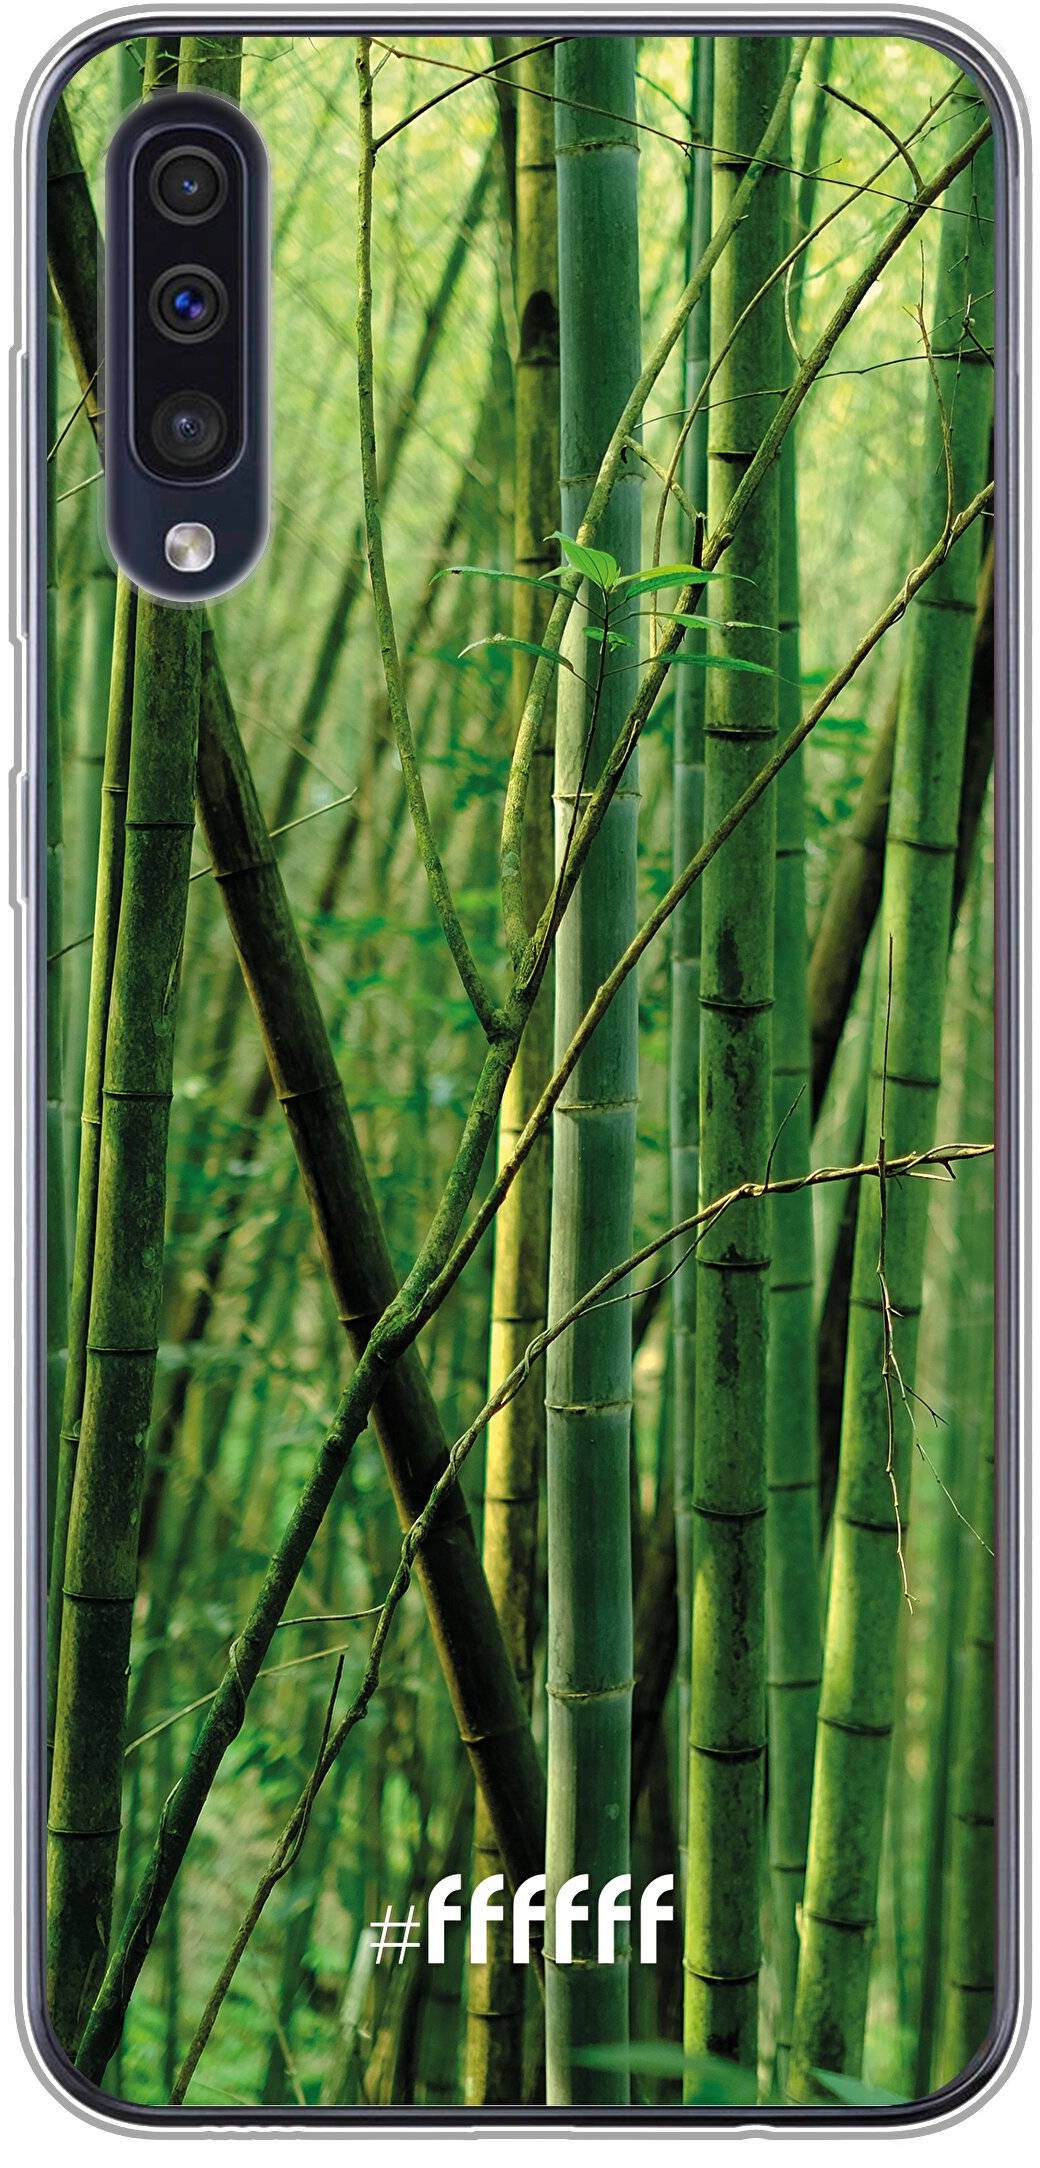 Bamboo Galaxy A40